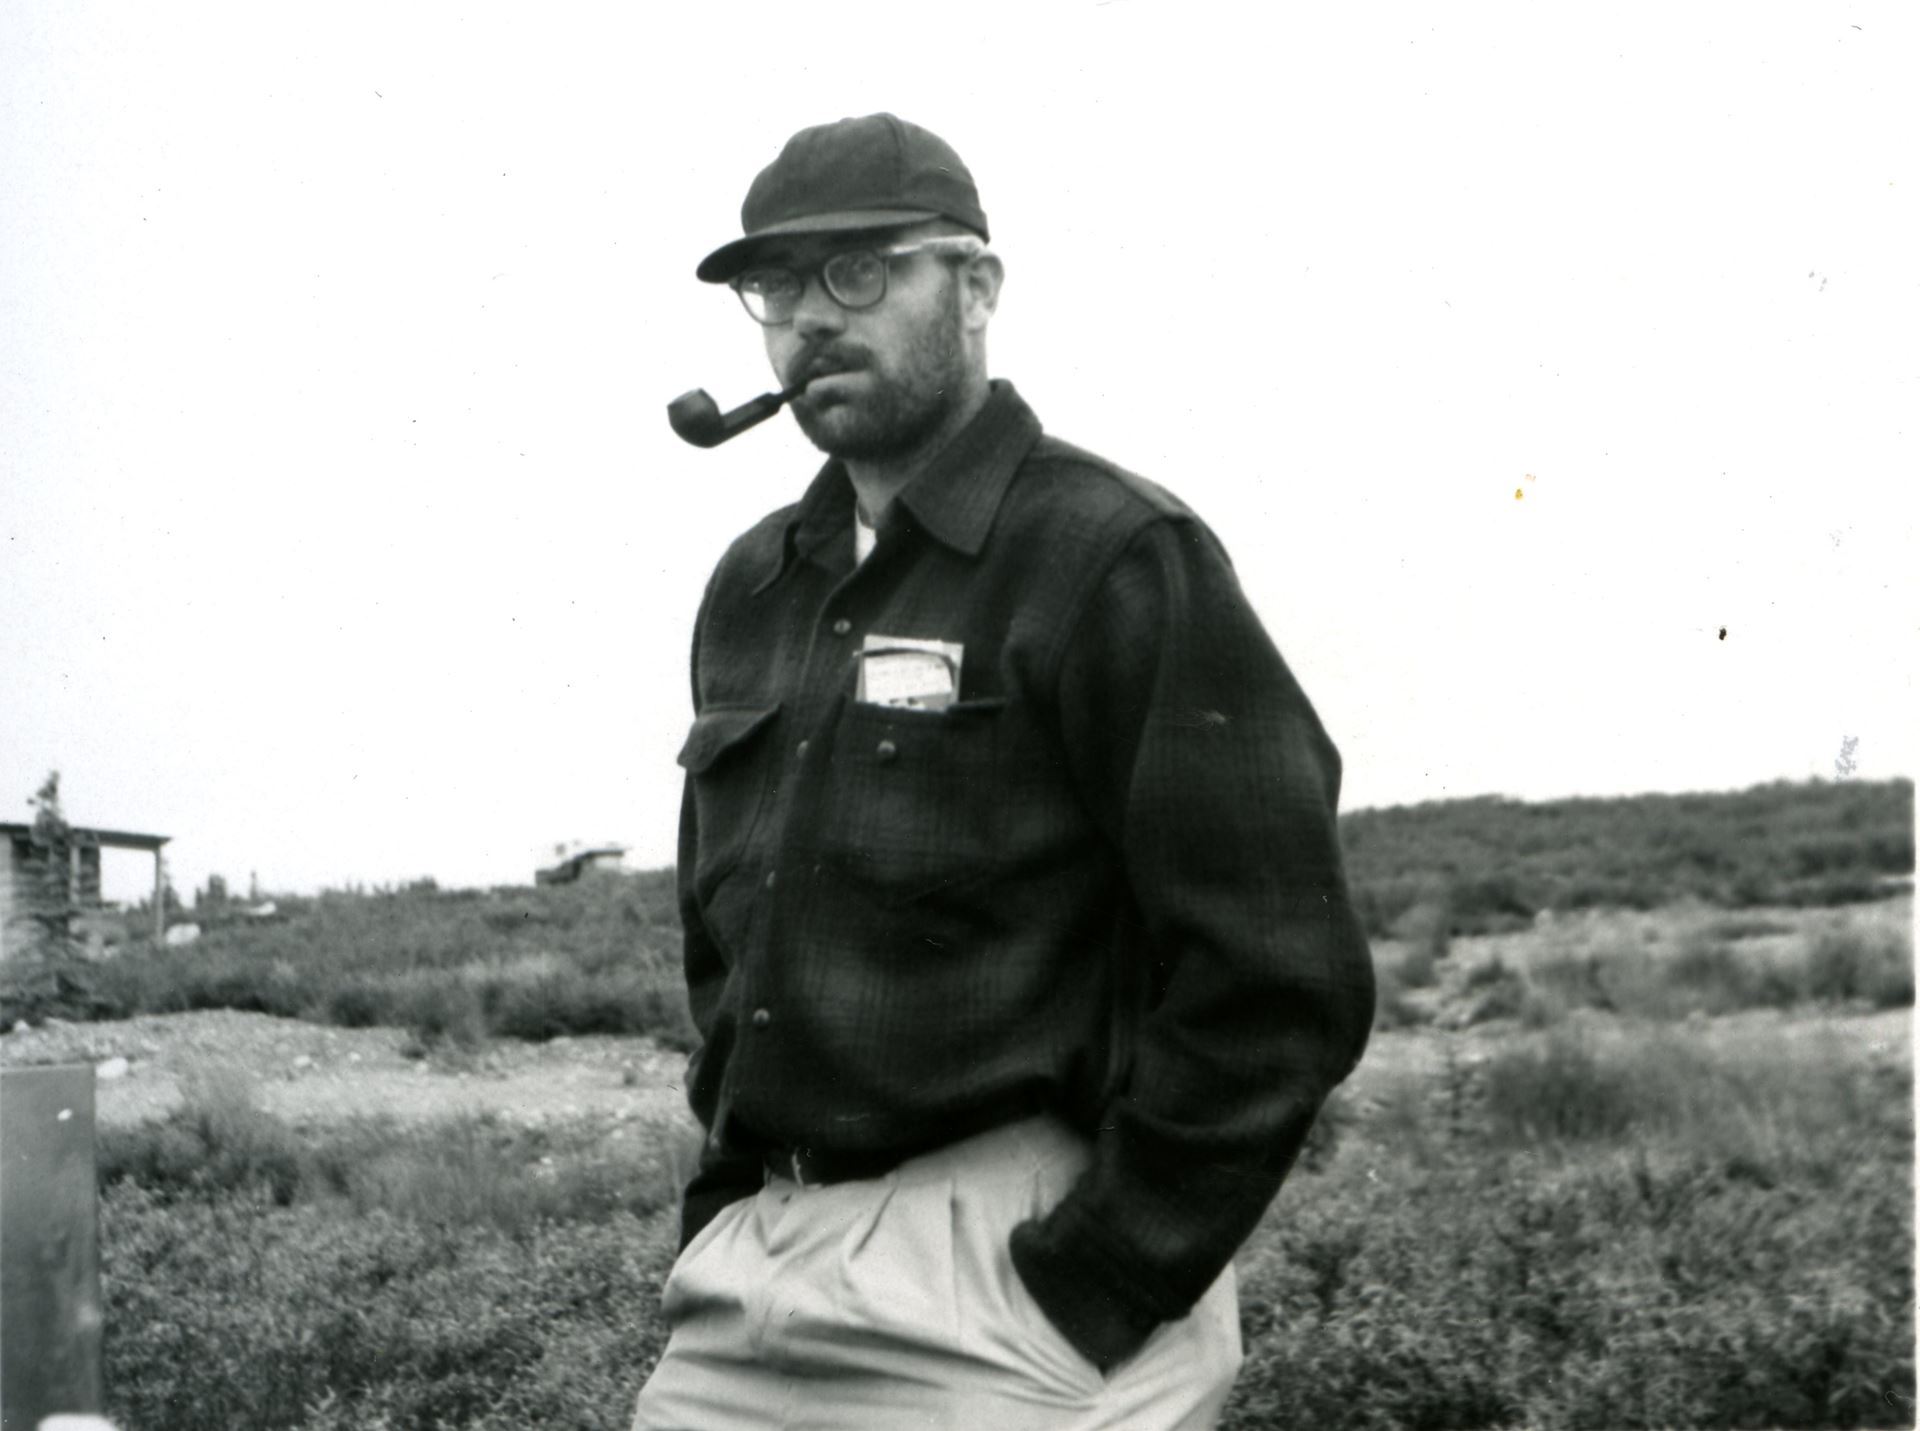 Dr. Mark Dyken at Mt. McKinley National Park in Alaska in 1959